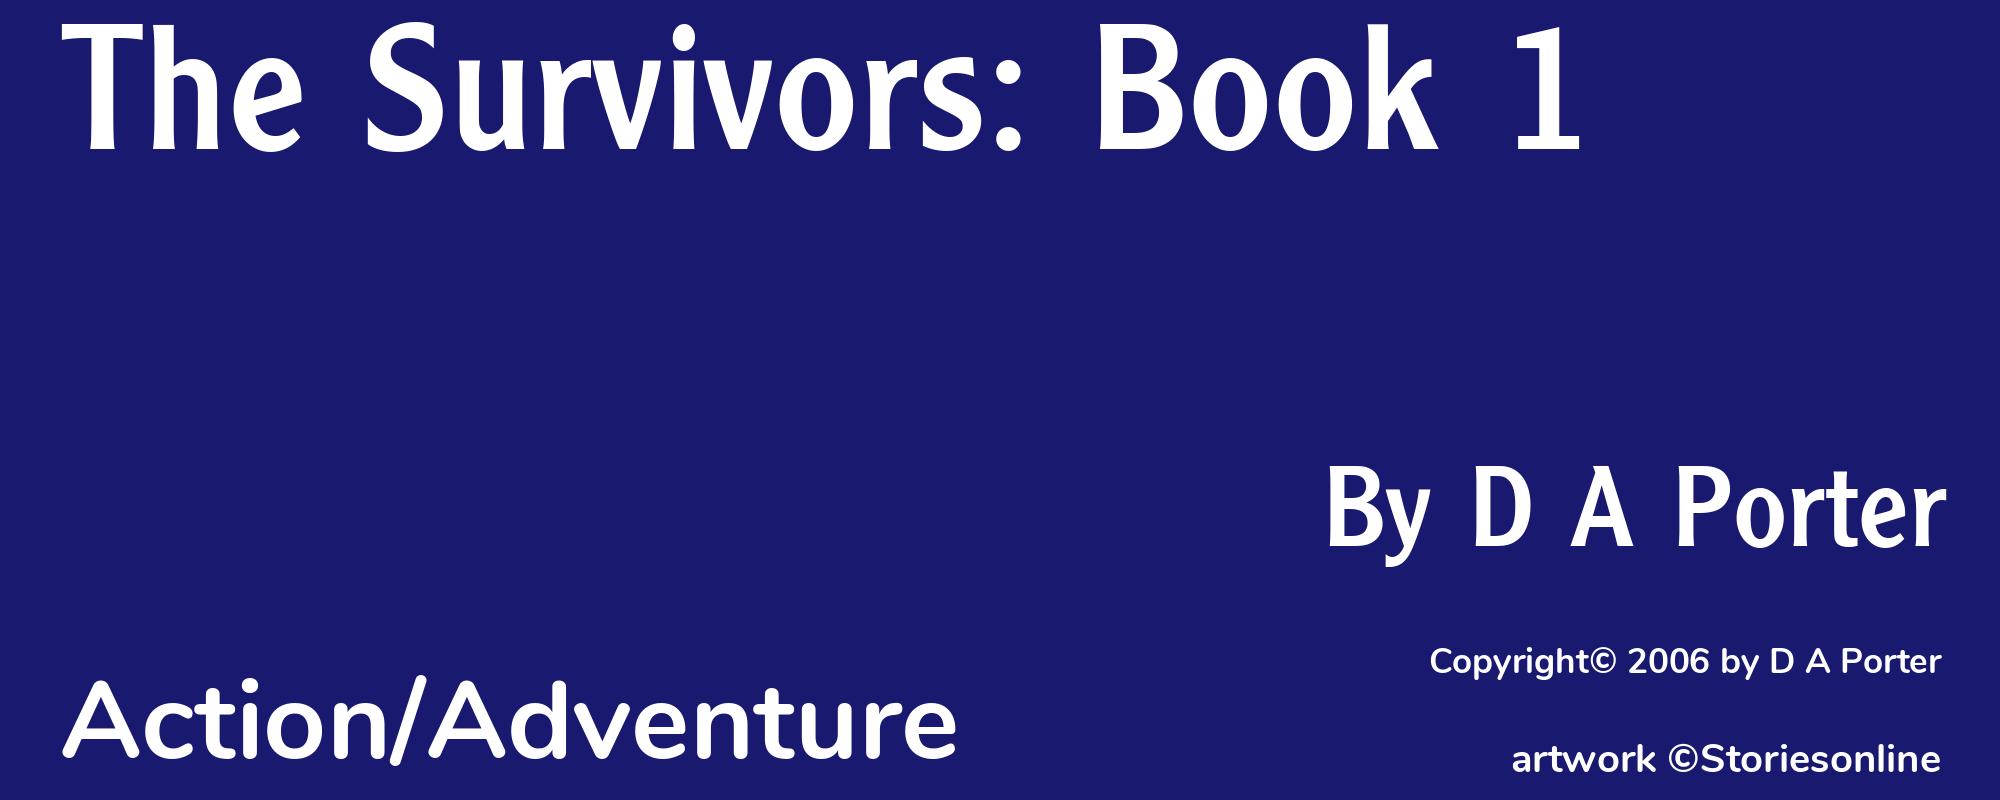 The Survivors: Book 1 - Cover